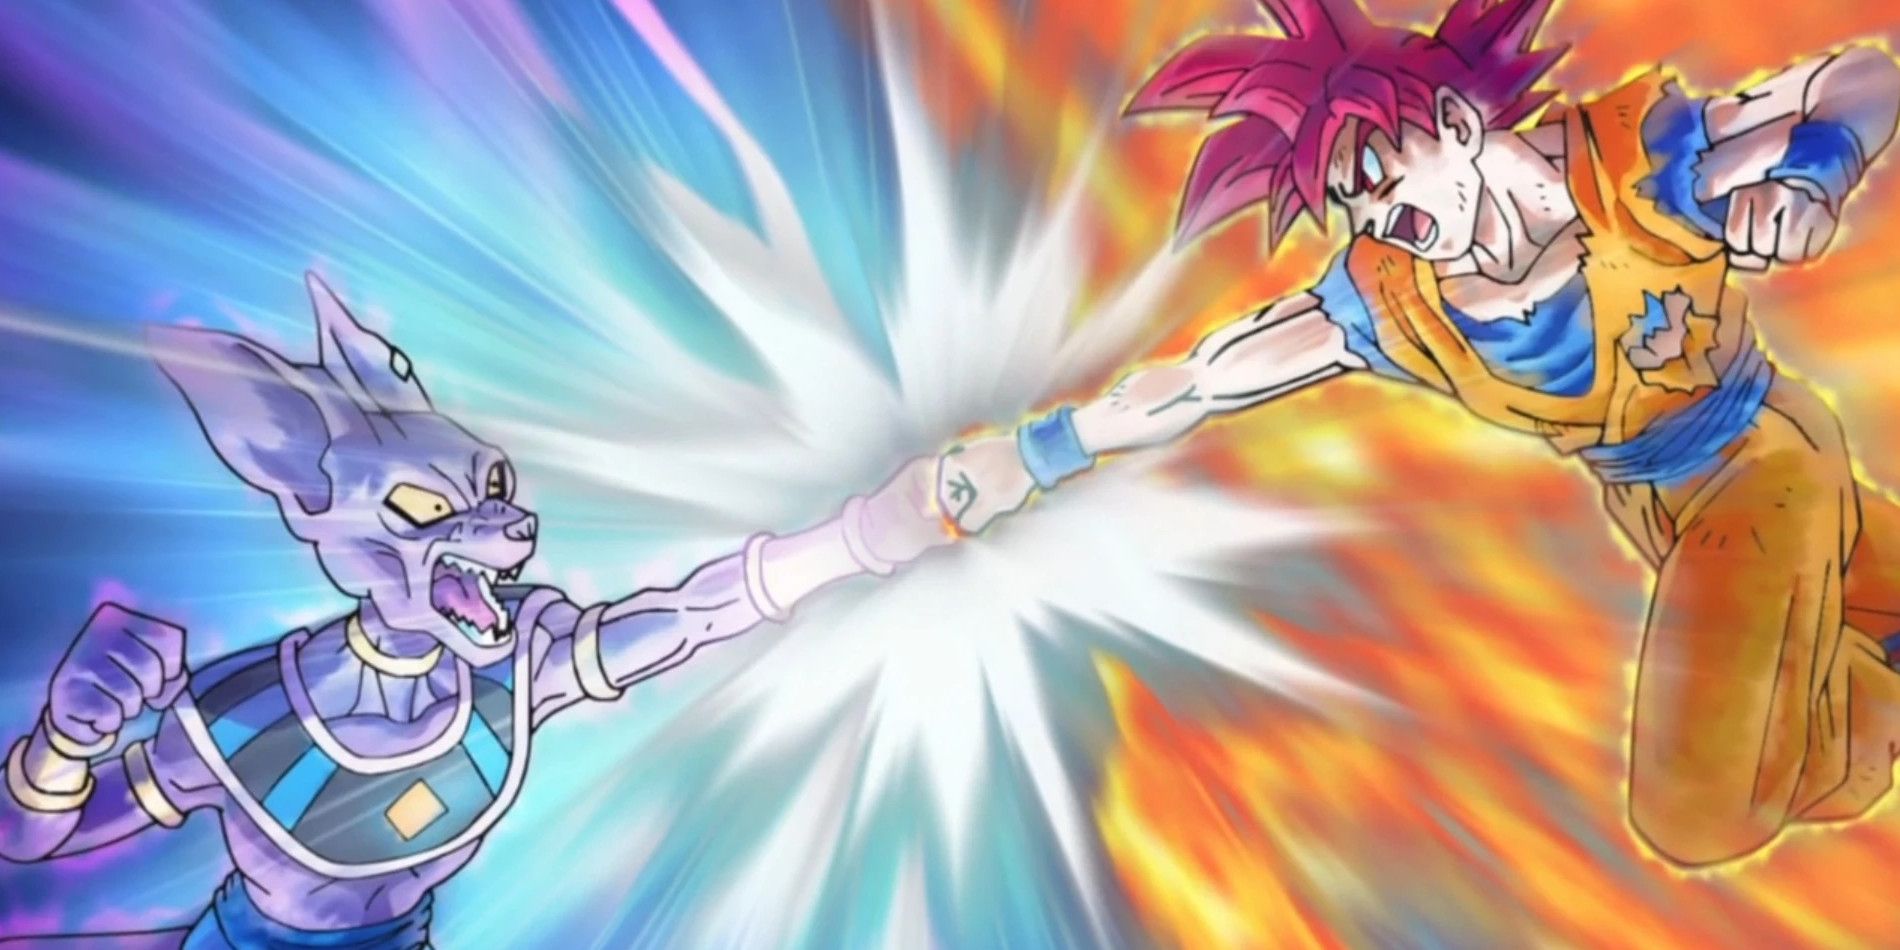 Beerus and Goku clash in Dragon Ball Super's God of Destruction Beerus saga.